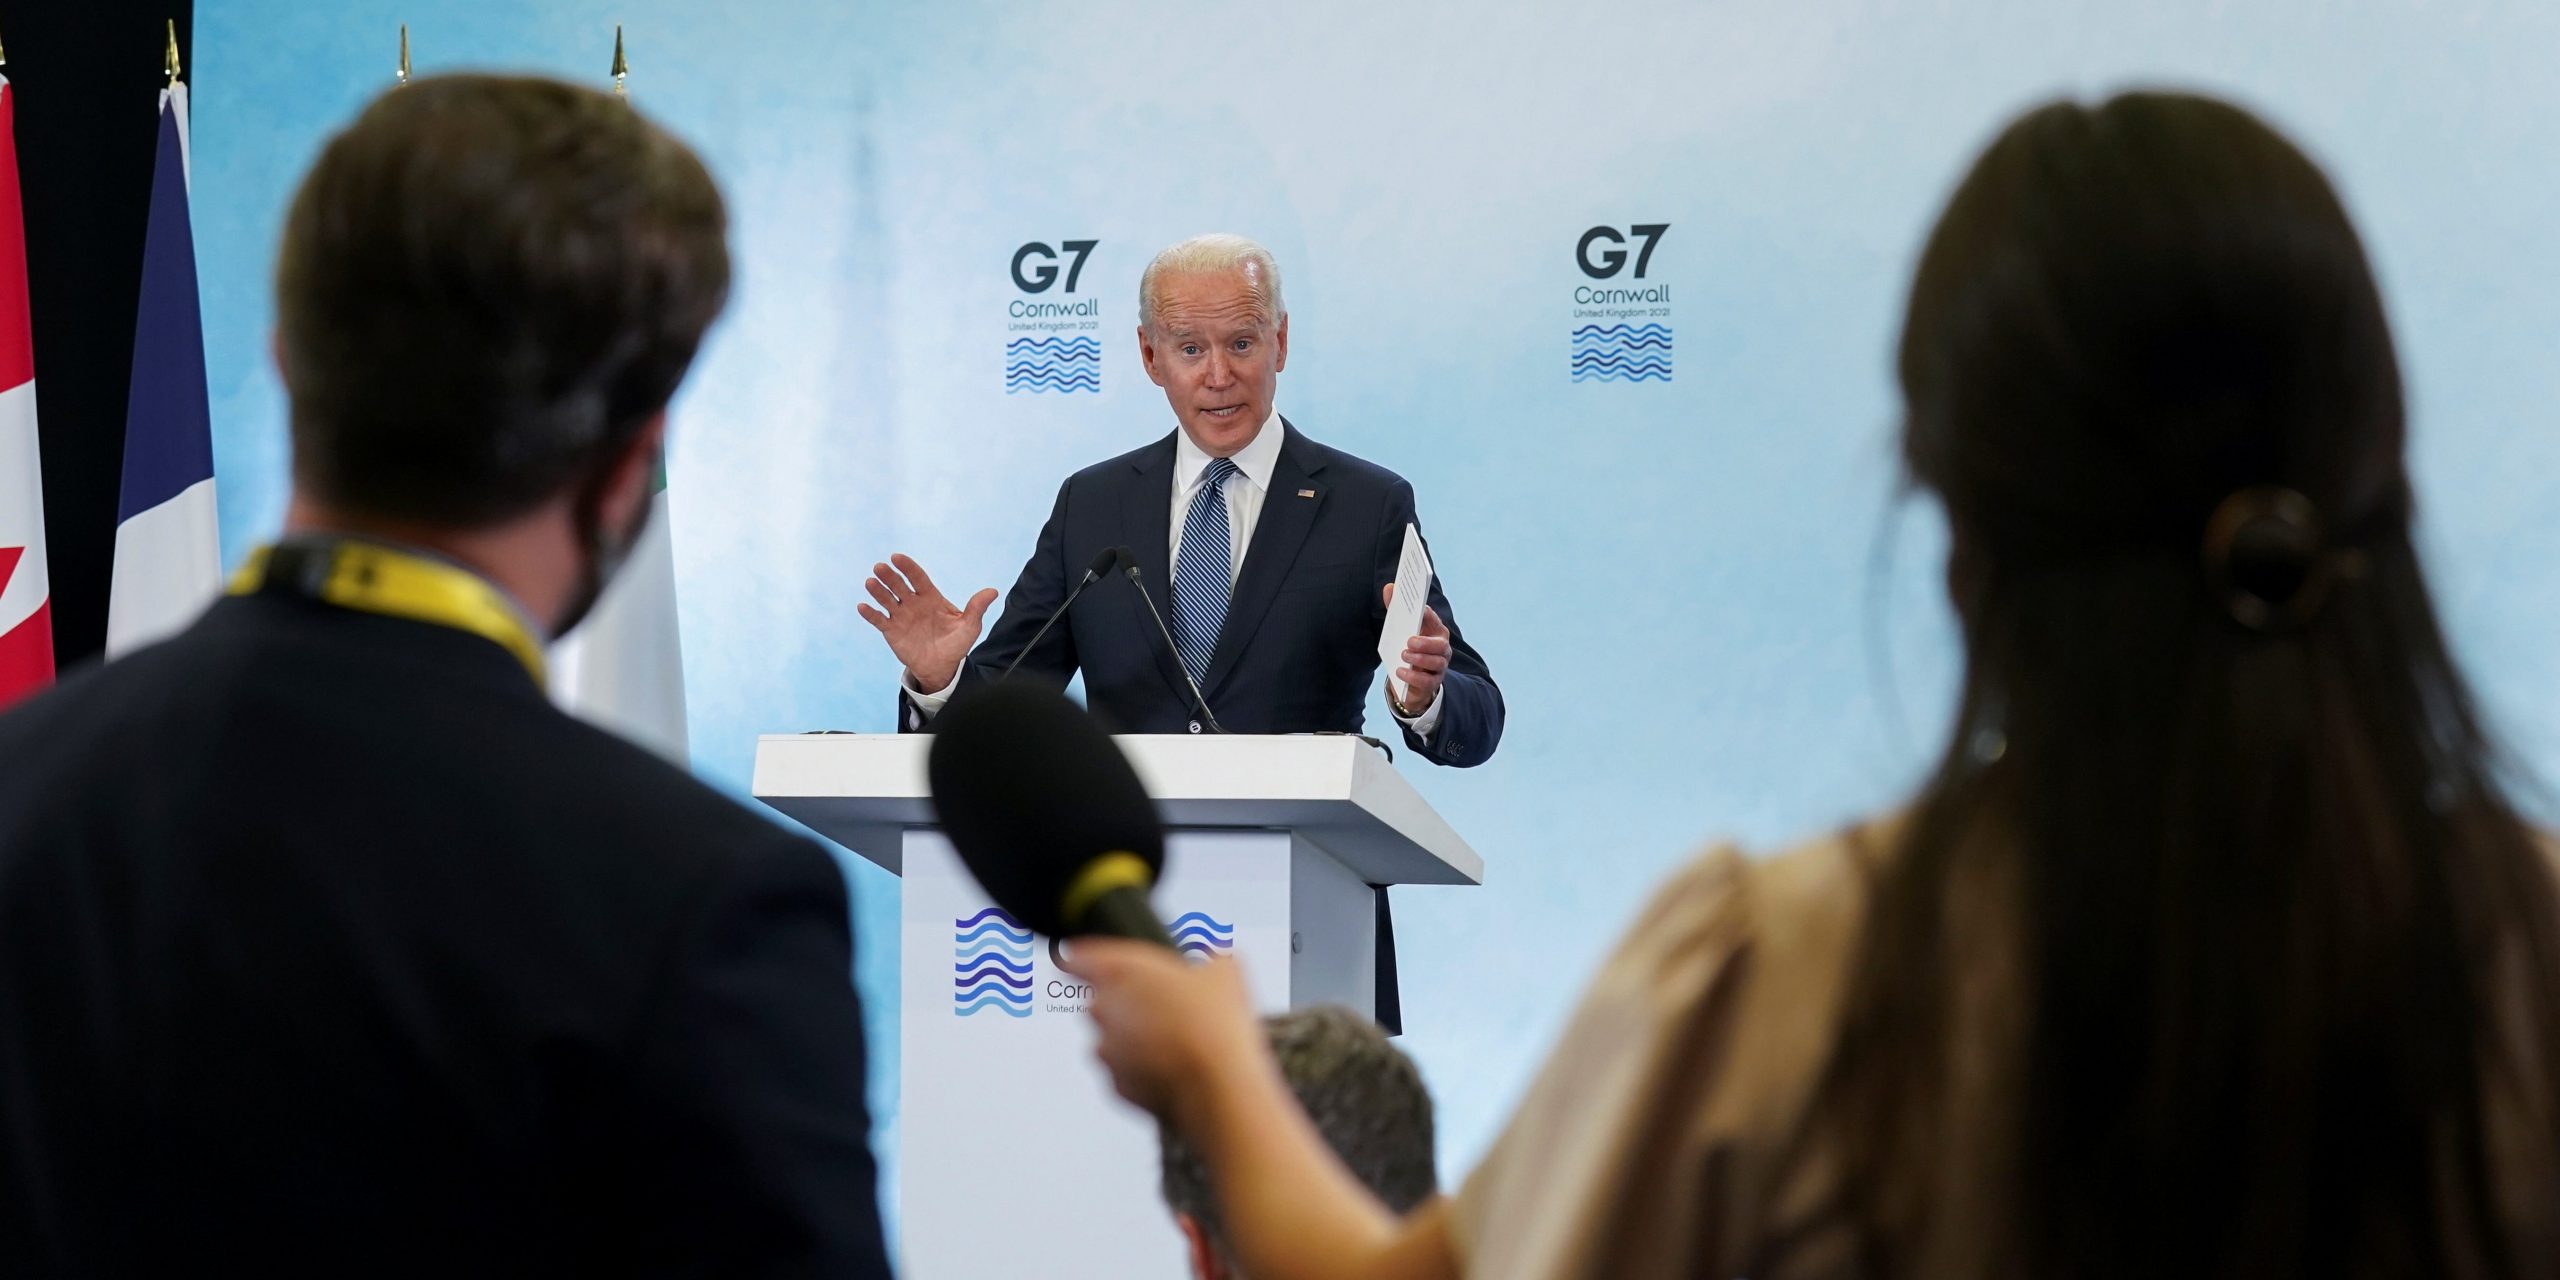 Biden at G7 meeting on Sunday, June 13